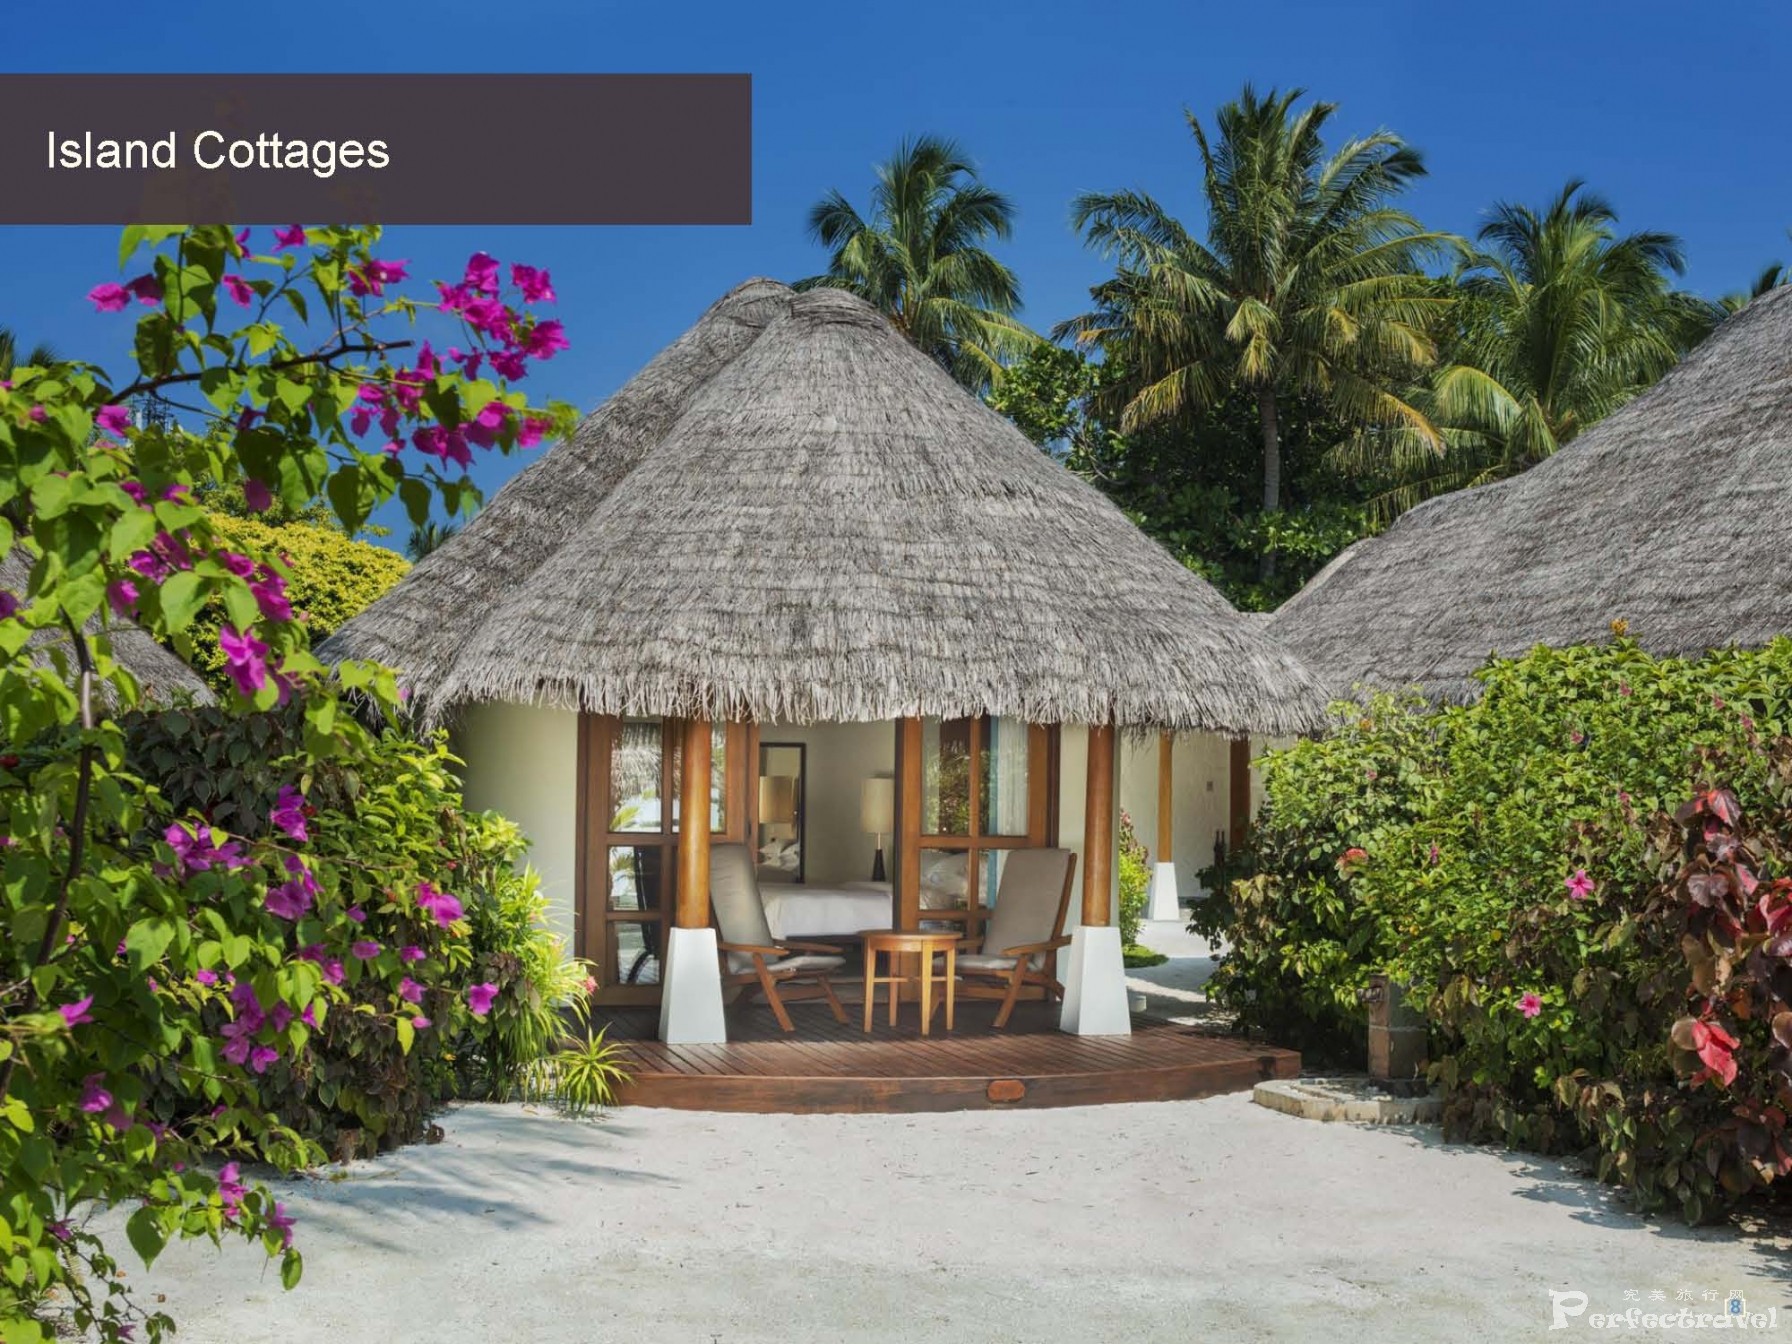 Sheraton Maldives - Overview Presentation 2015_Page_08.jpg